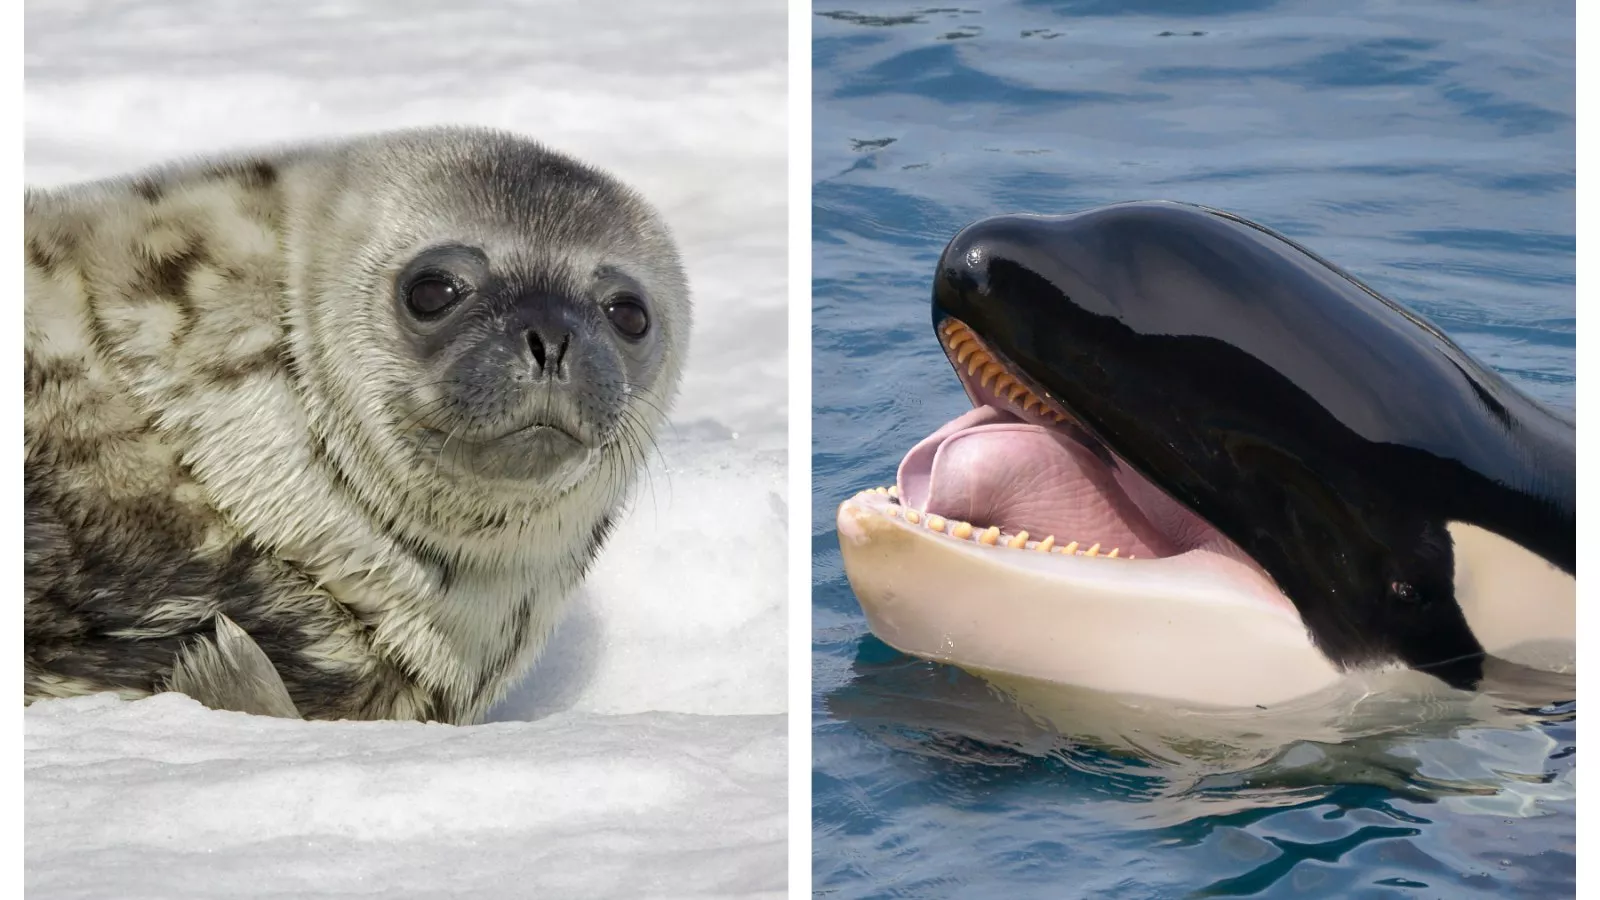 orca hunting seals